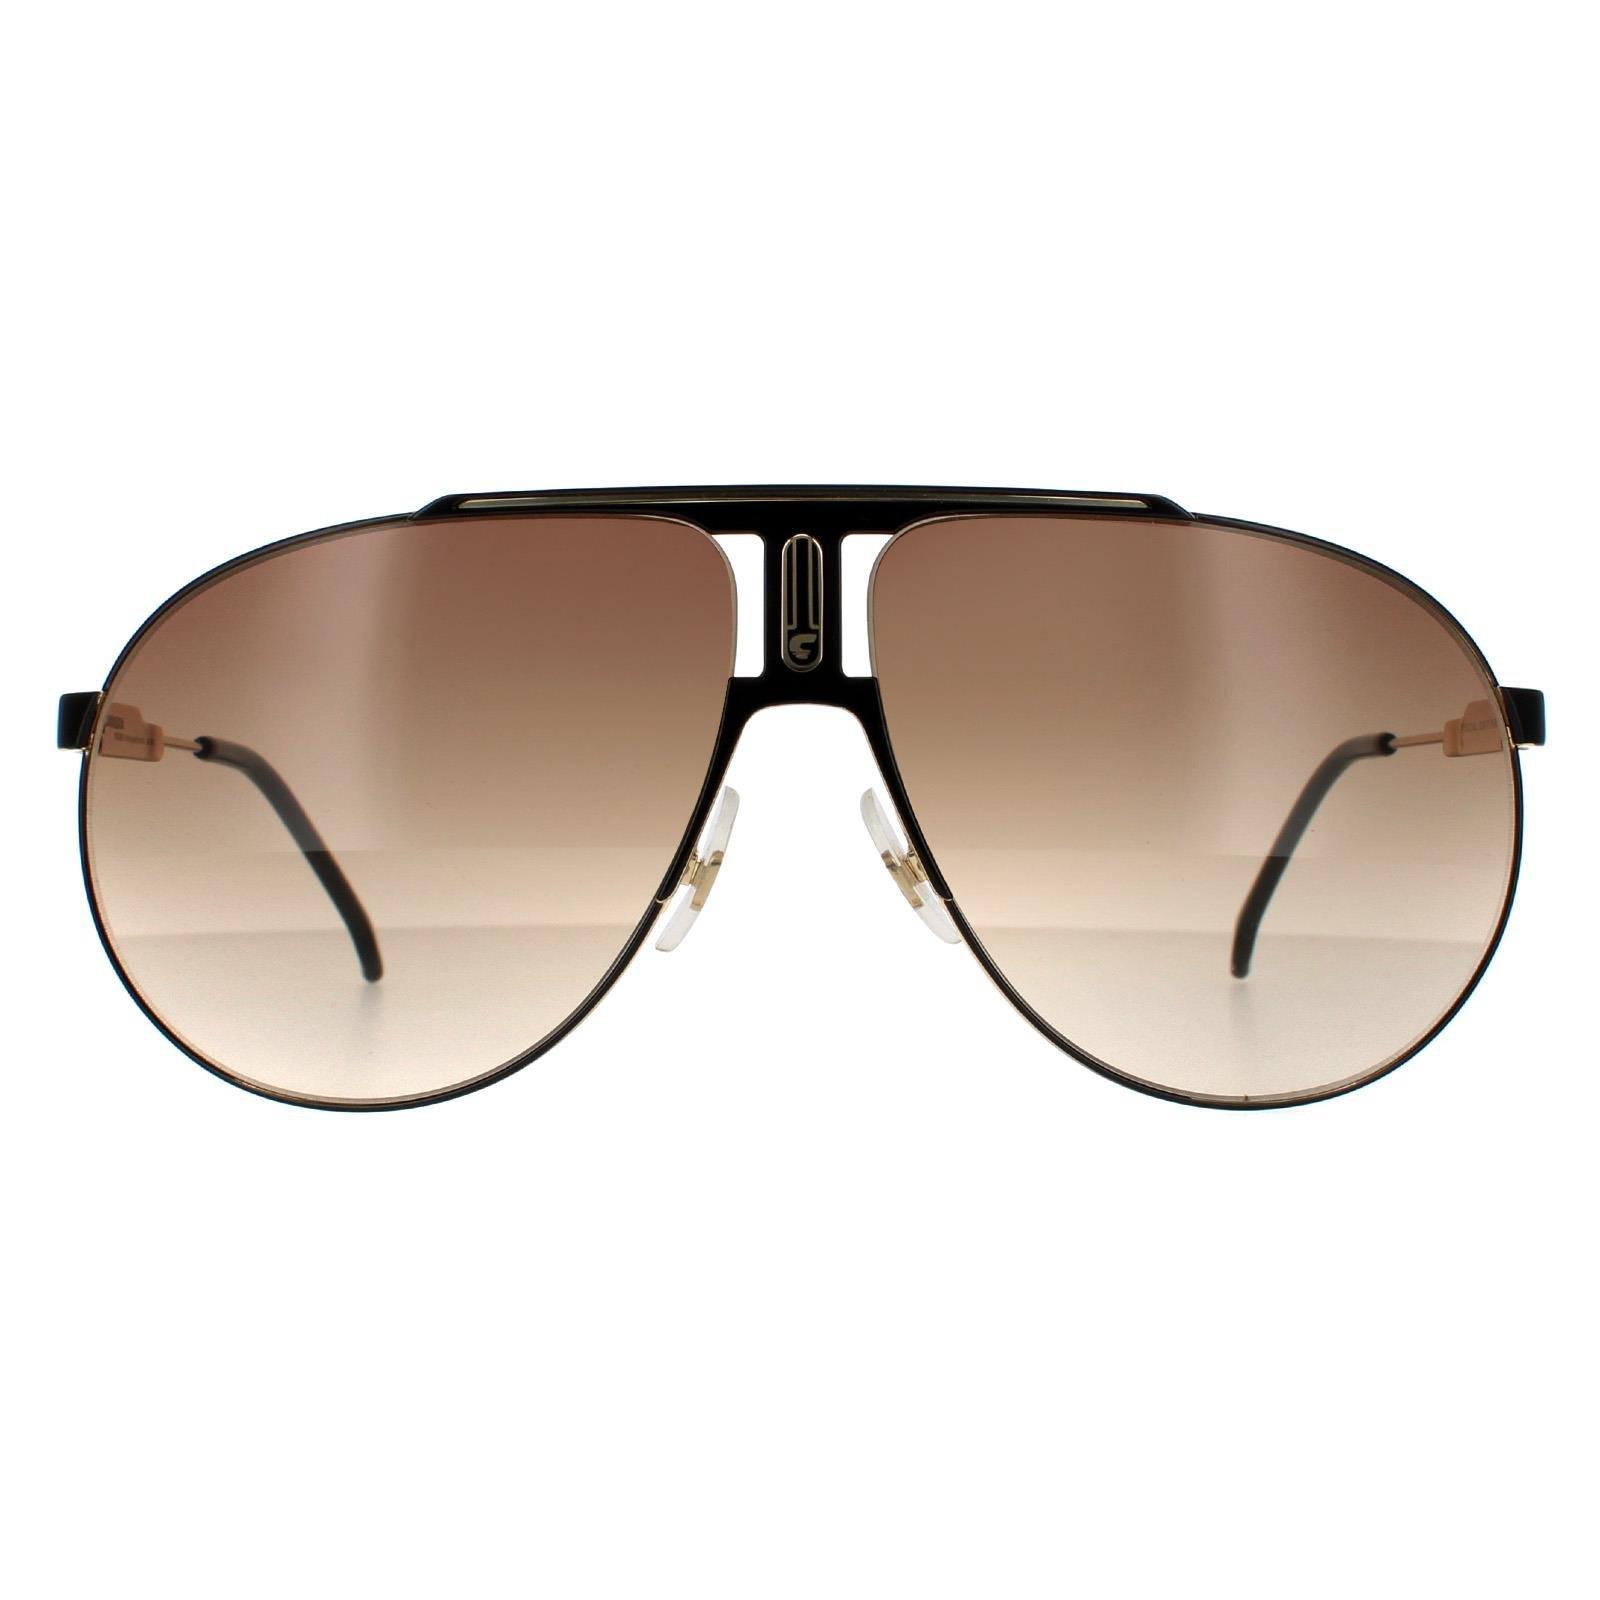 Sunglasses | Aviator Black Gold Brown Gradient Sunglasses | Carrera